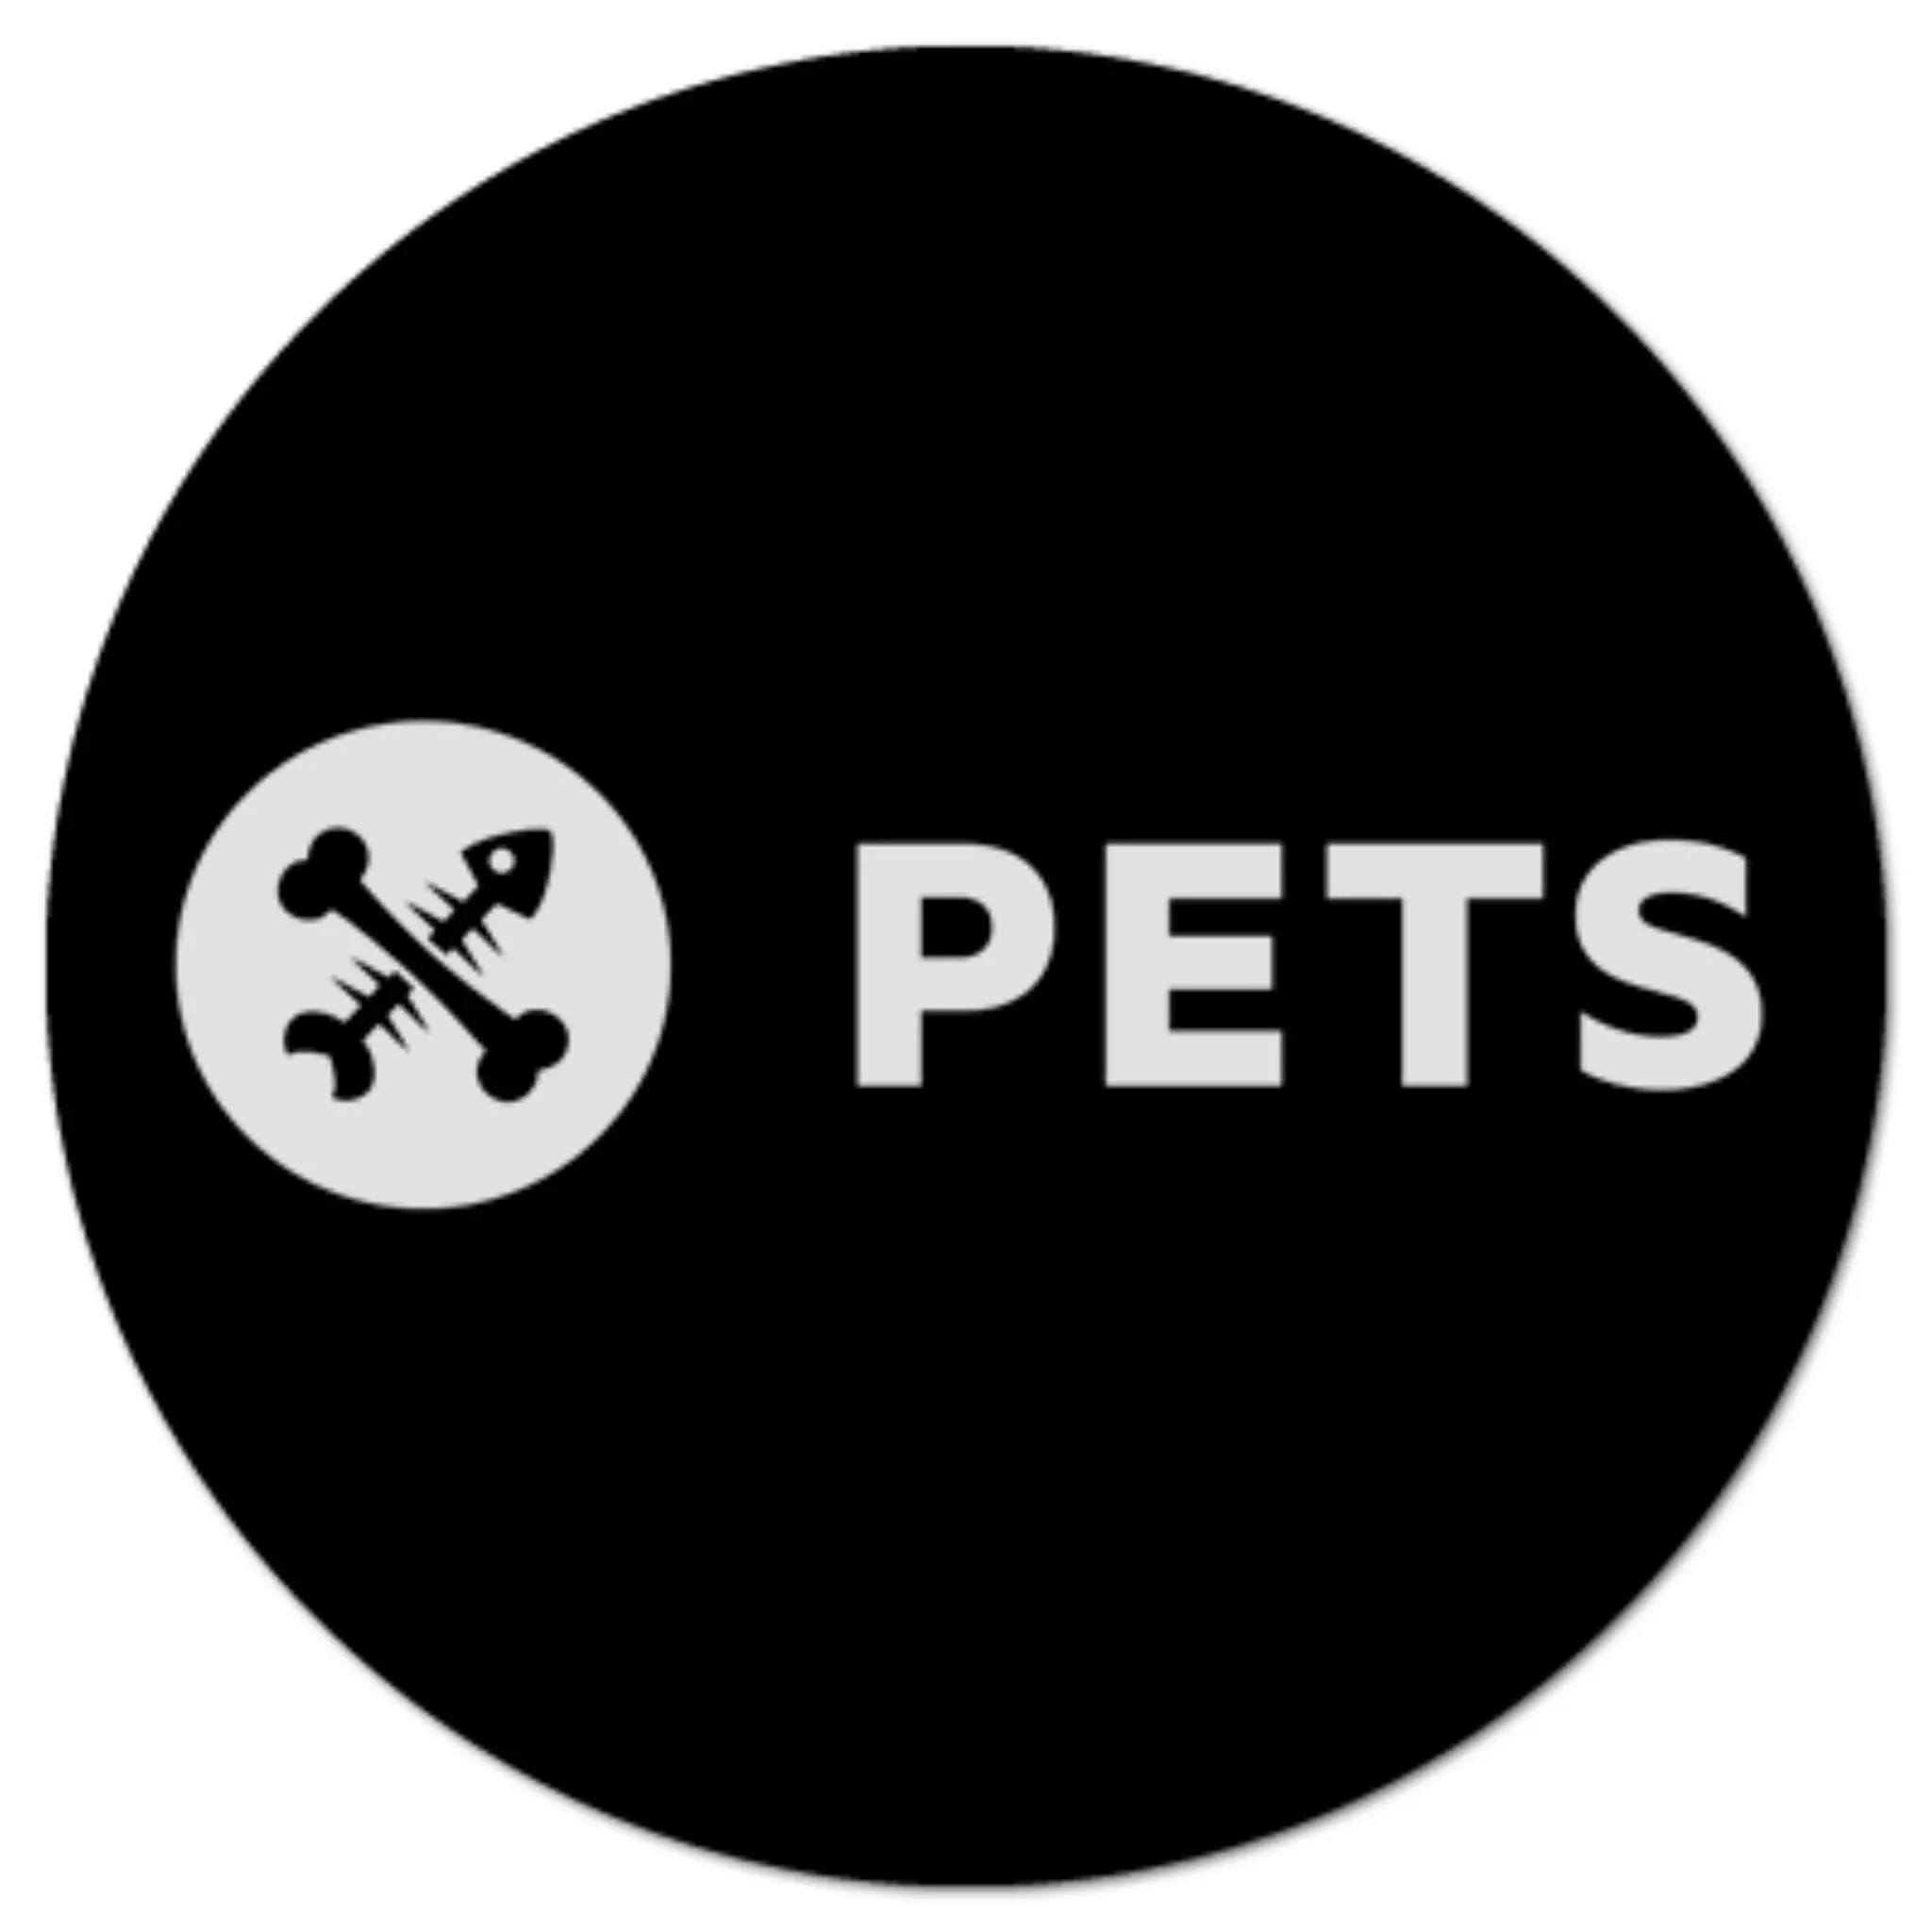 Pets Recordings